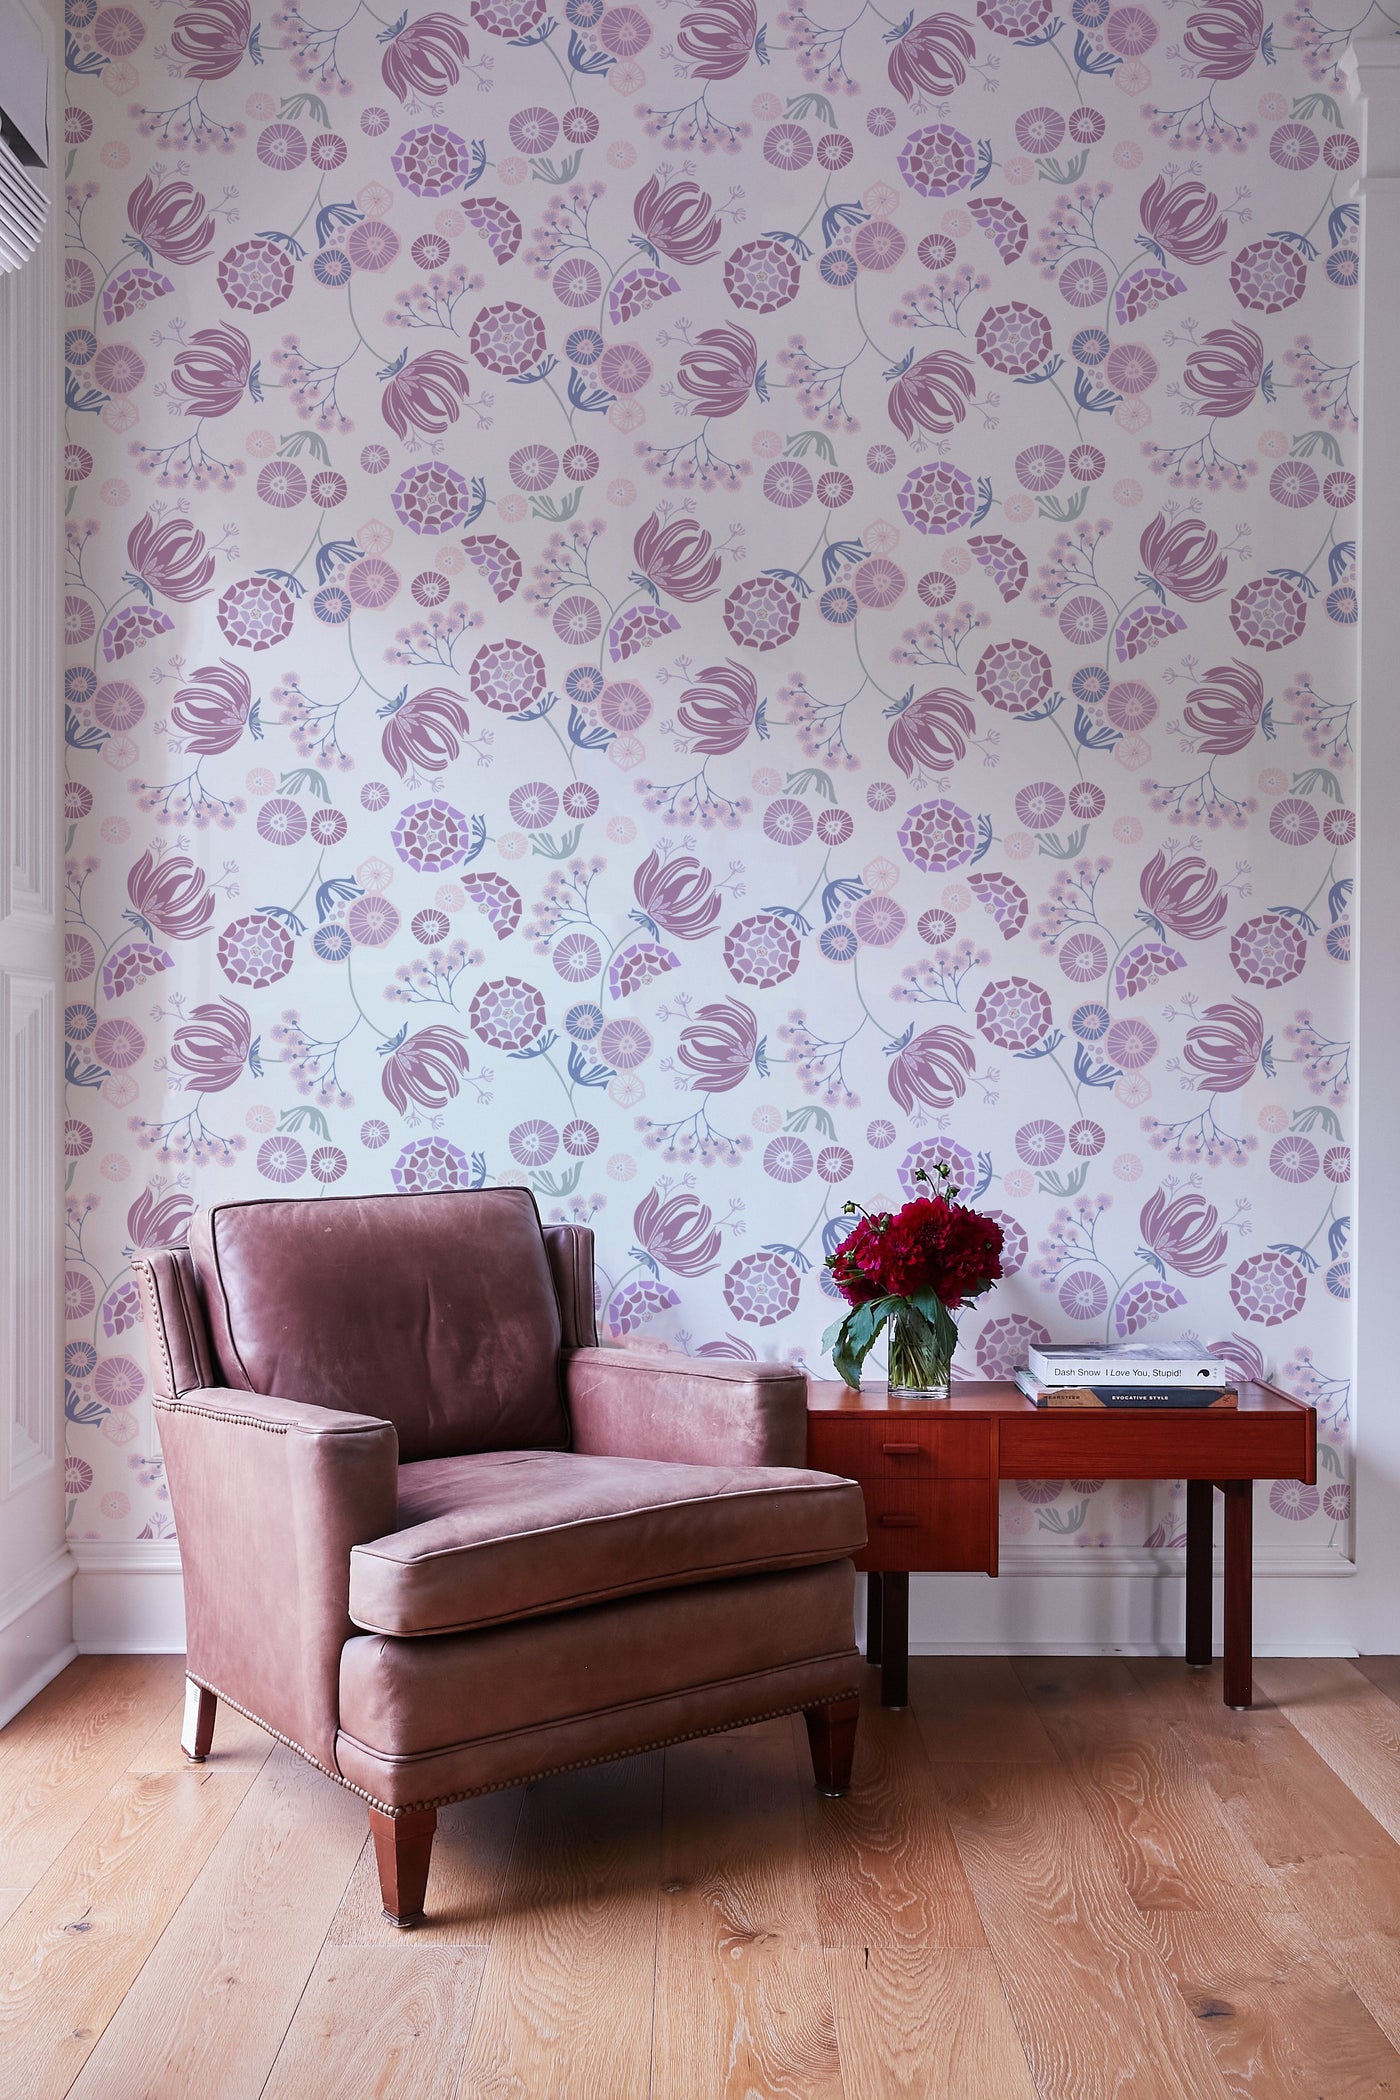 'Mediterranean Floral' Wallpaper by Tea Collection - Lavender